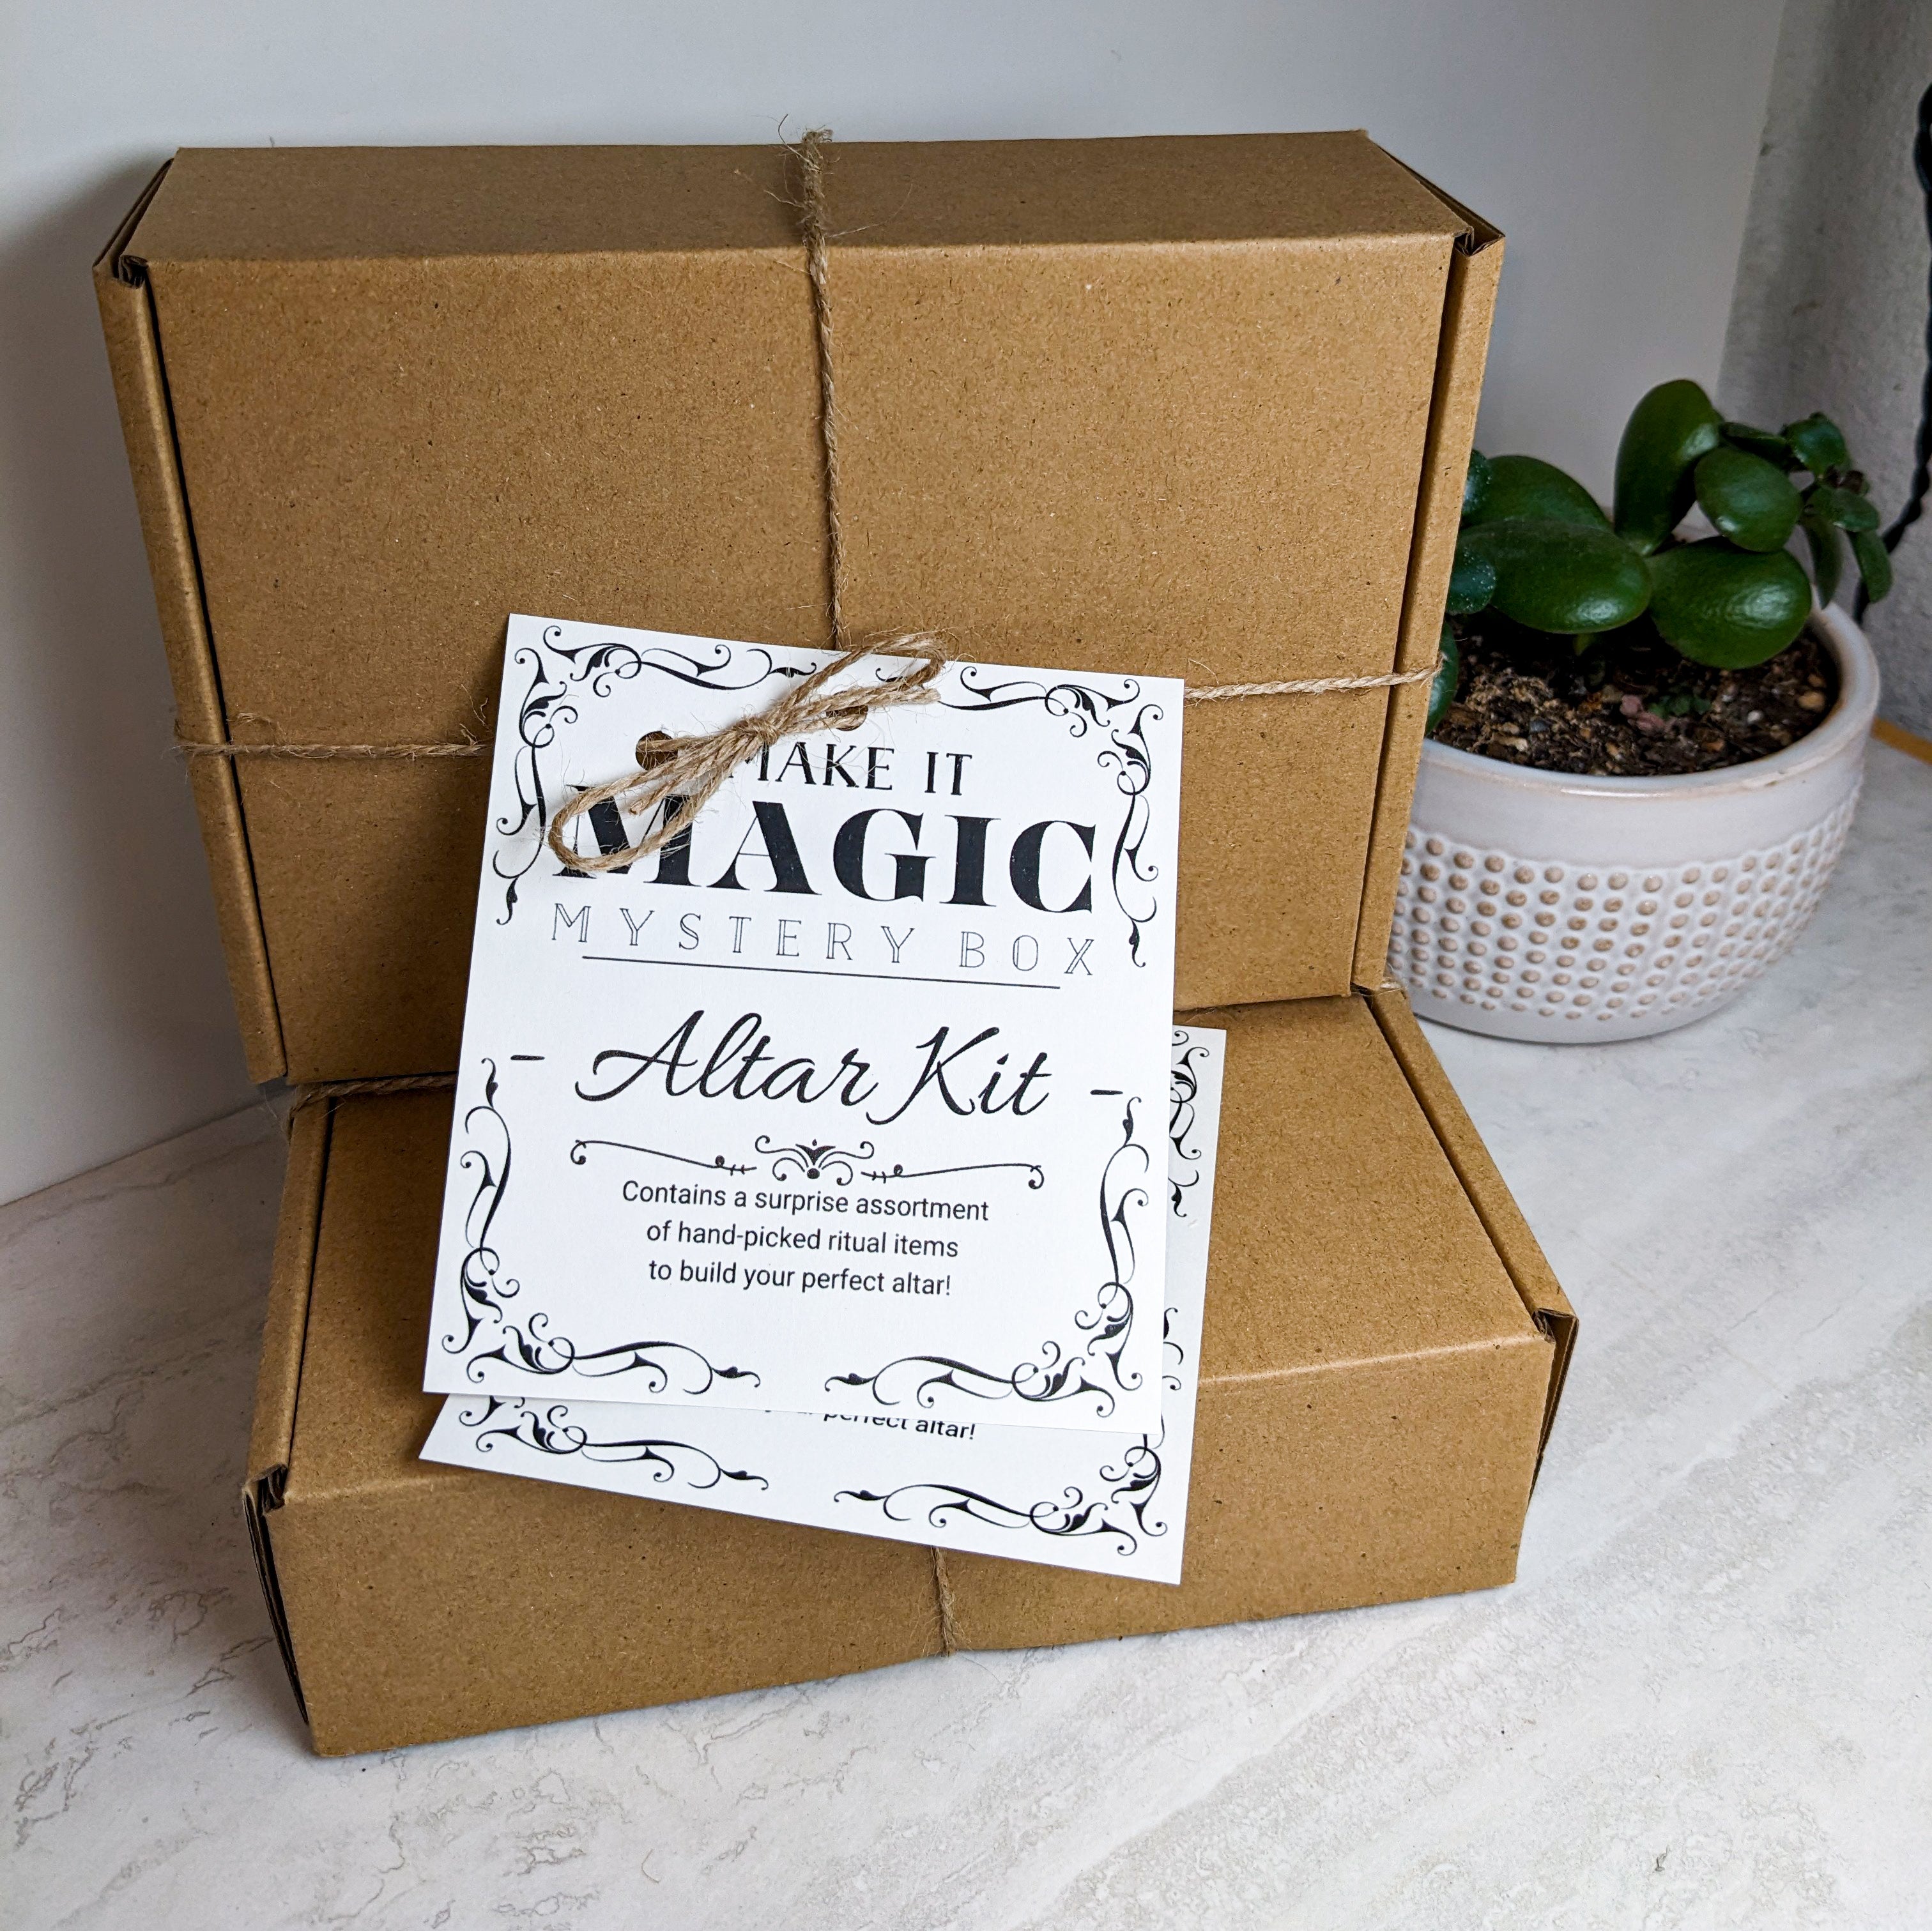 Make it Magic Mystery Box - Altar Kit